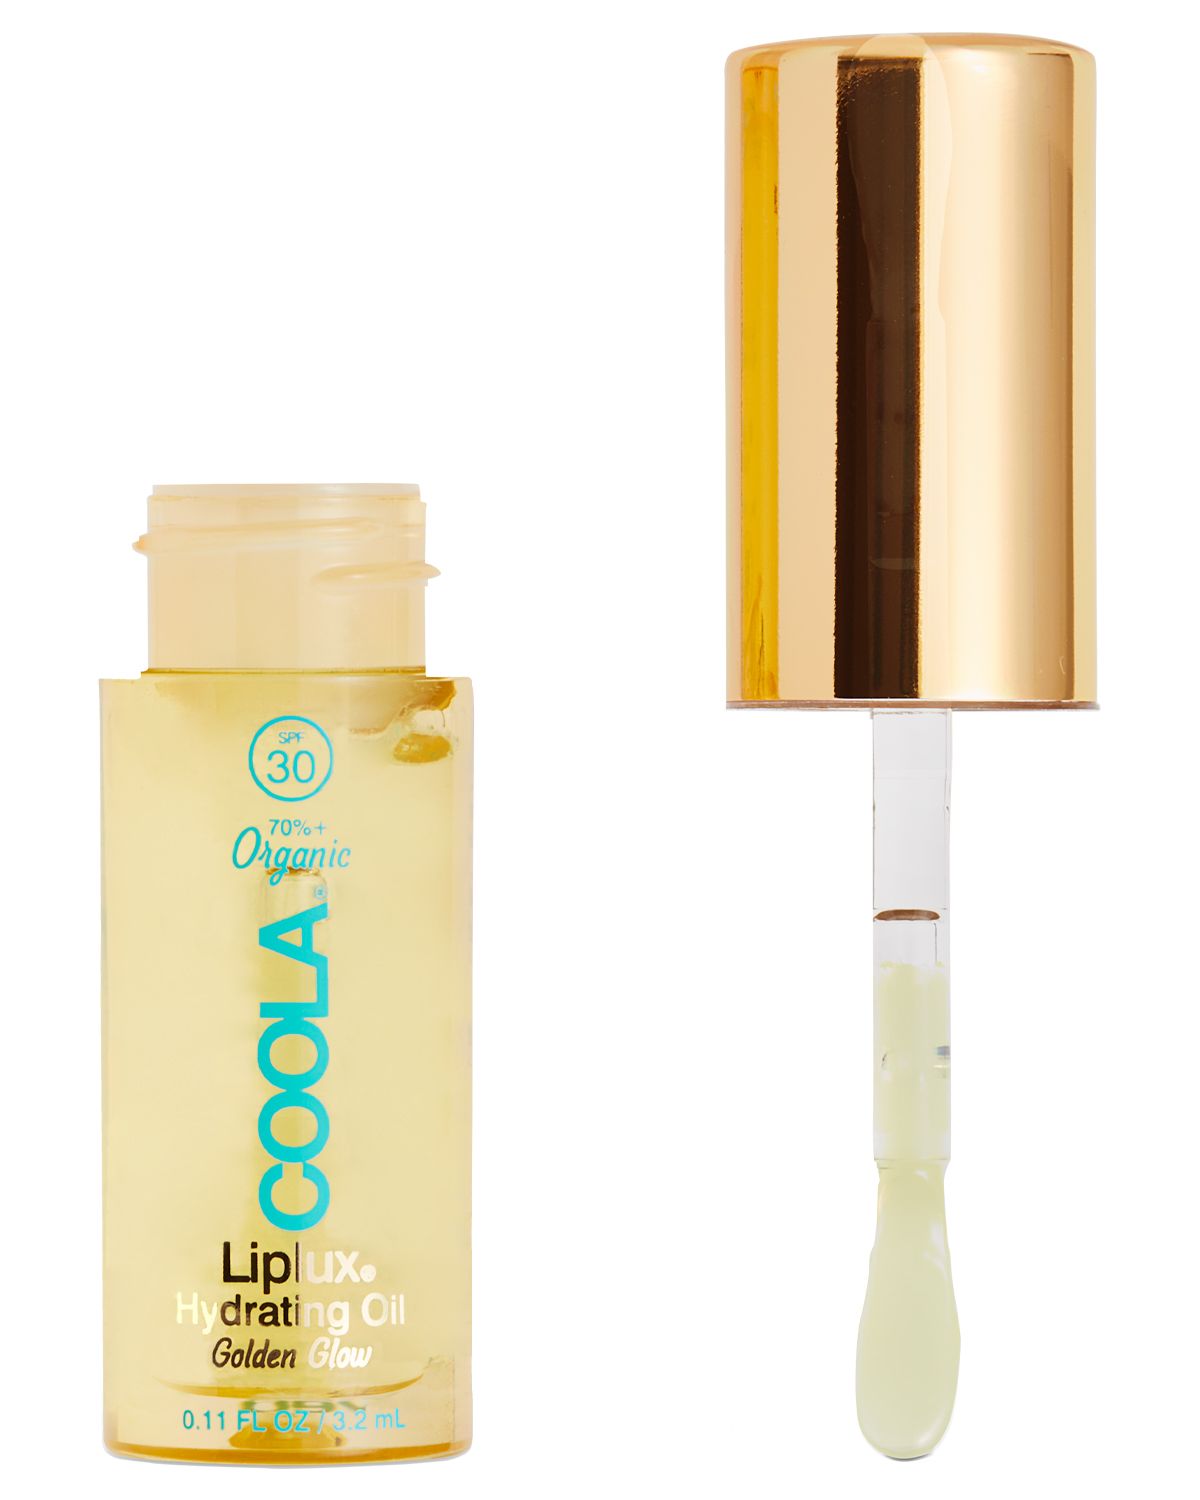 COOLA Classic Liplux Organic Hydrating Lip Oil Sunscreen, SPF 30 - 0.17 fl oz